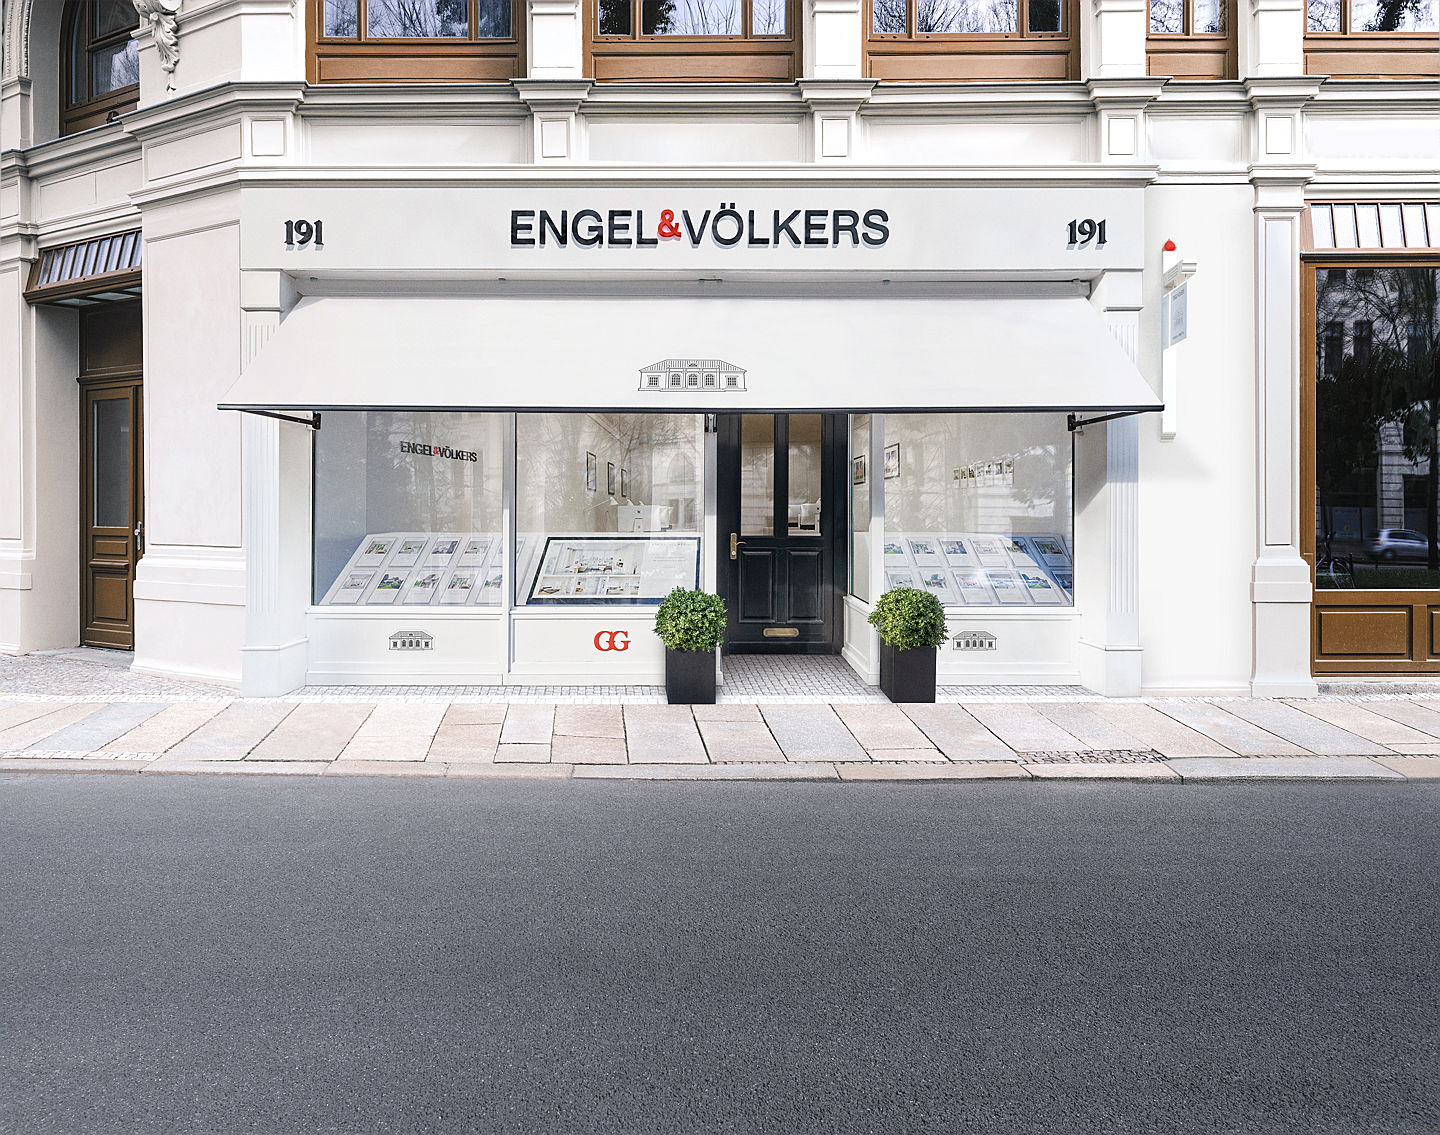  Hamburg
- Engel & Völkers_Shop